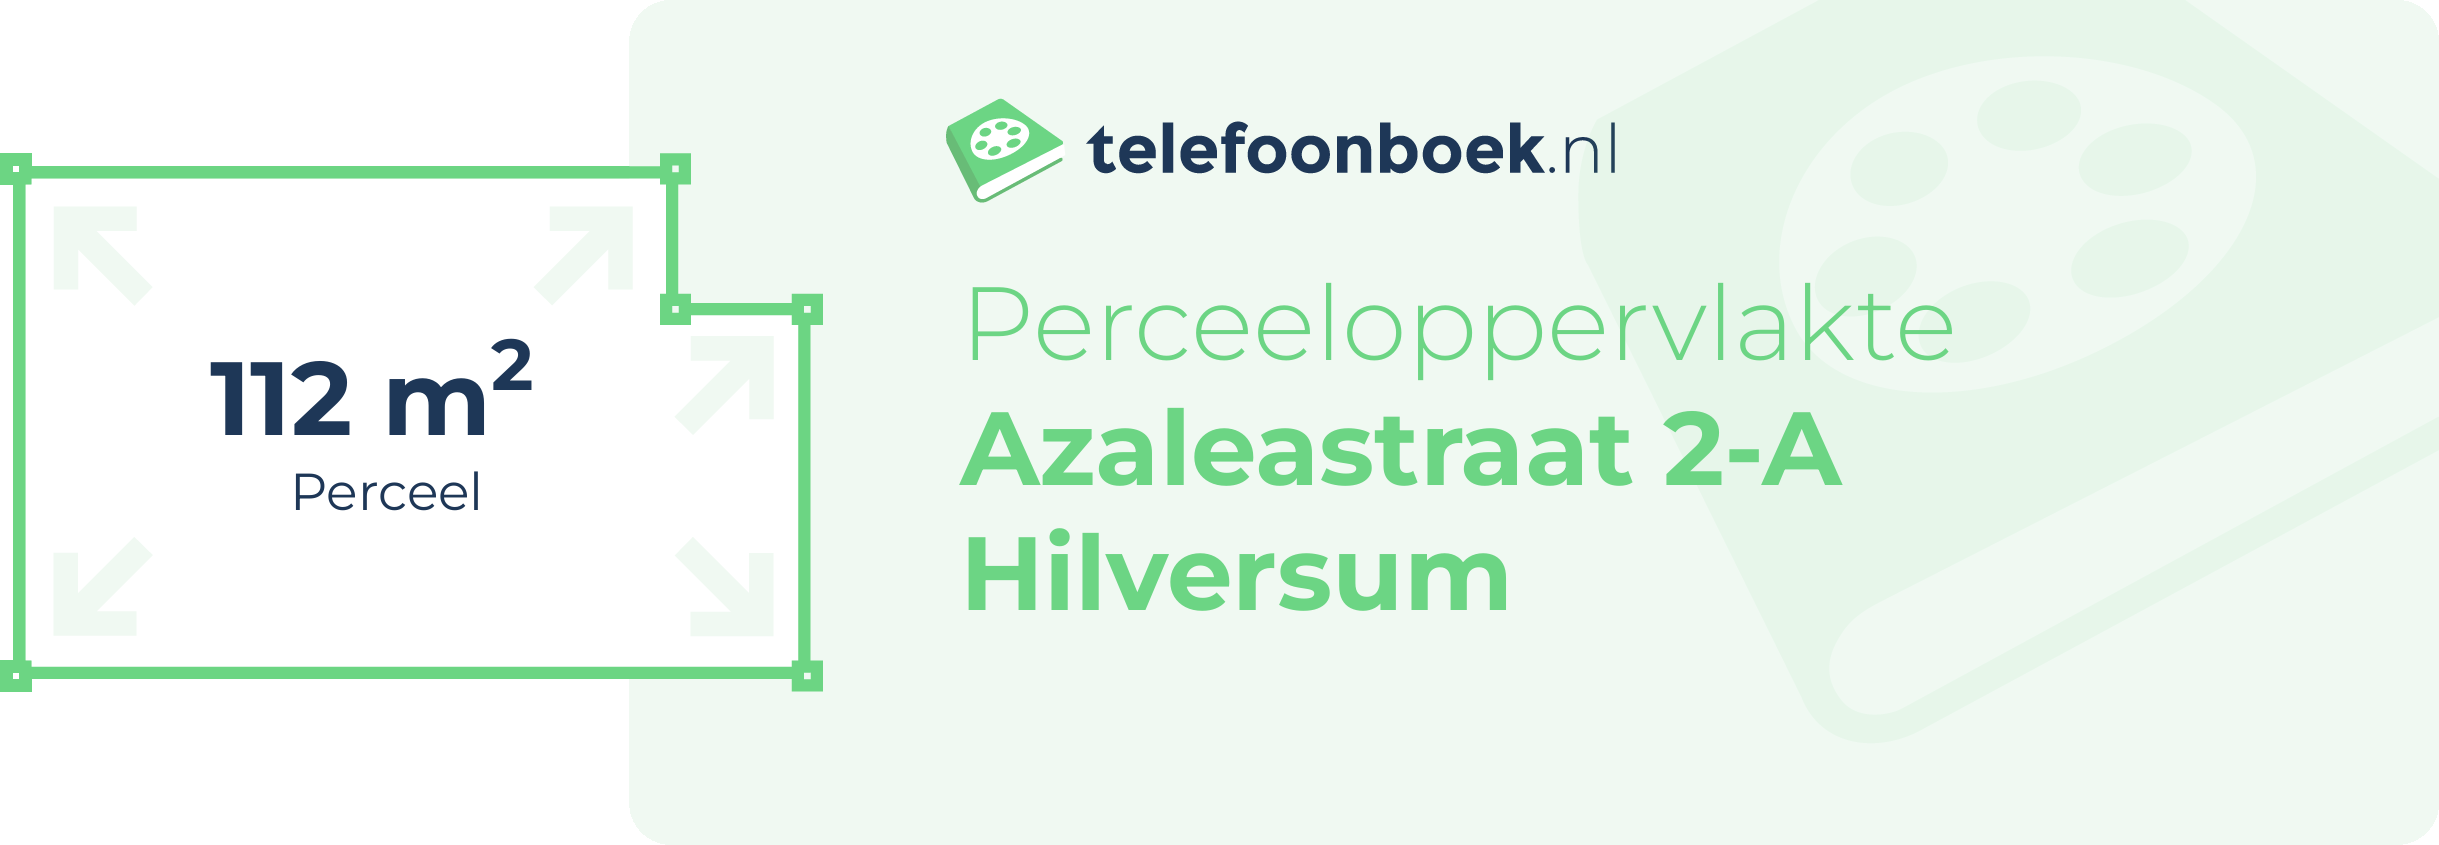 Perceeloppervlakte Azaleastraat 2-A Hilversum